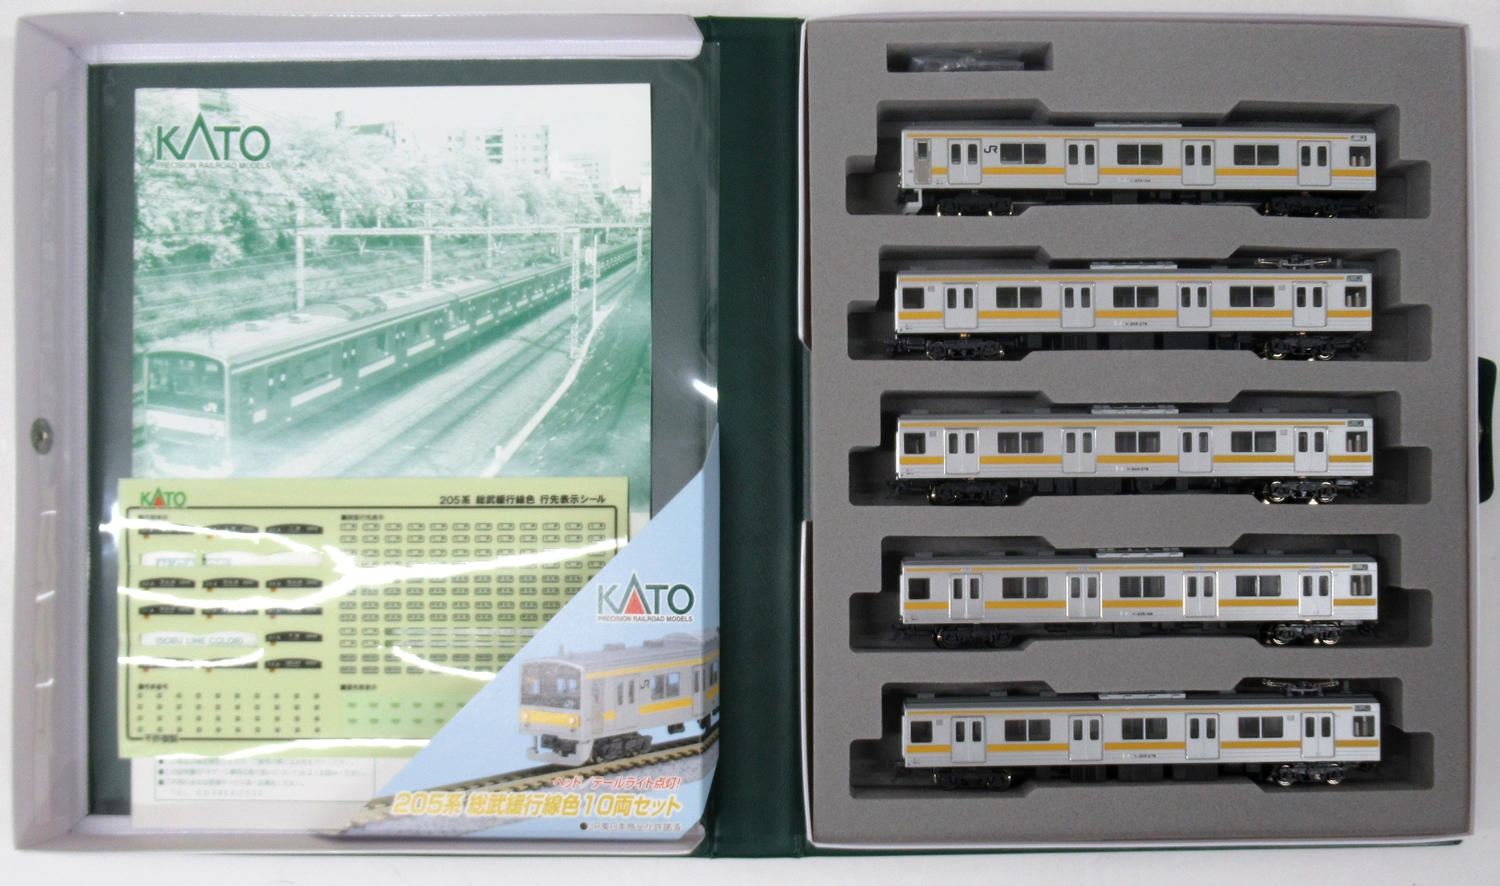 公式]鉄道模型(JR・国鉄 形式別(N)、通勤型車両、205系)カテゴリ 